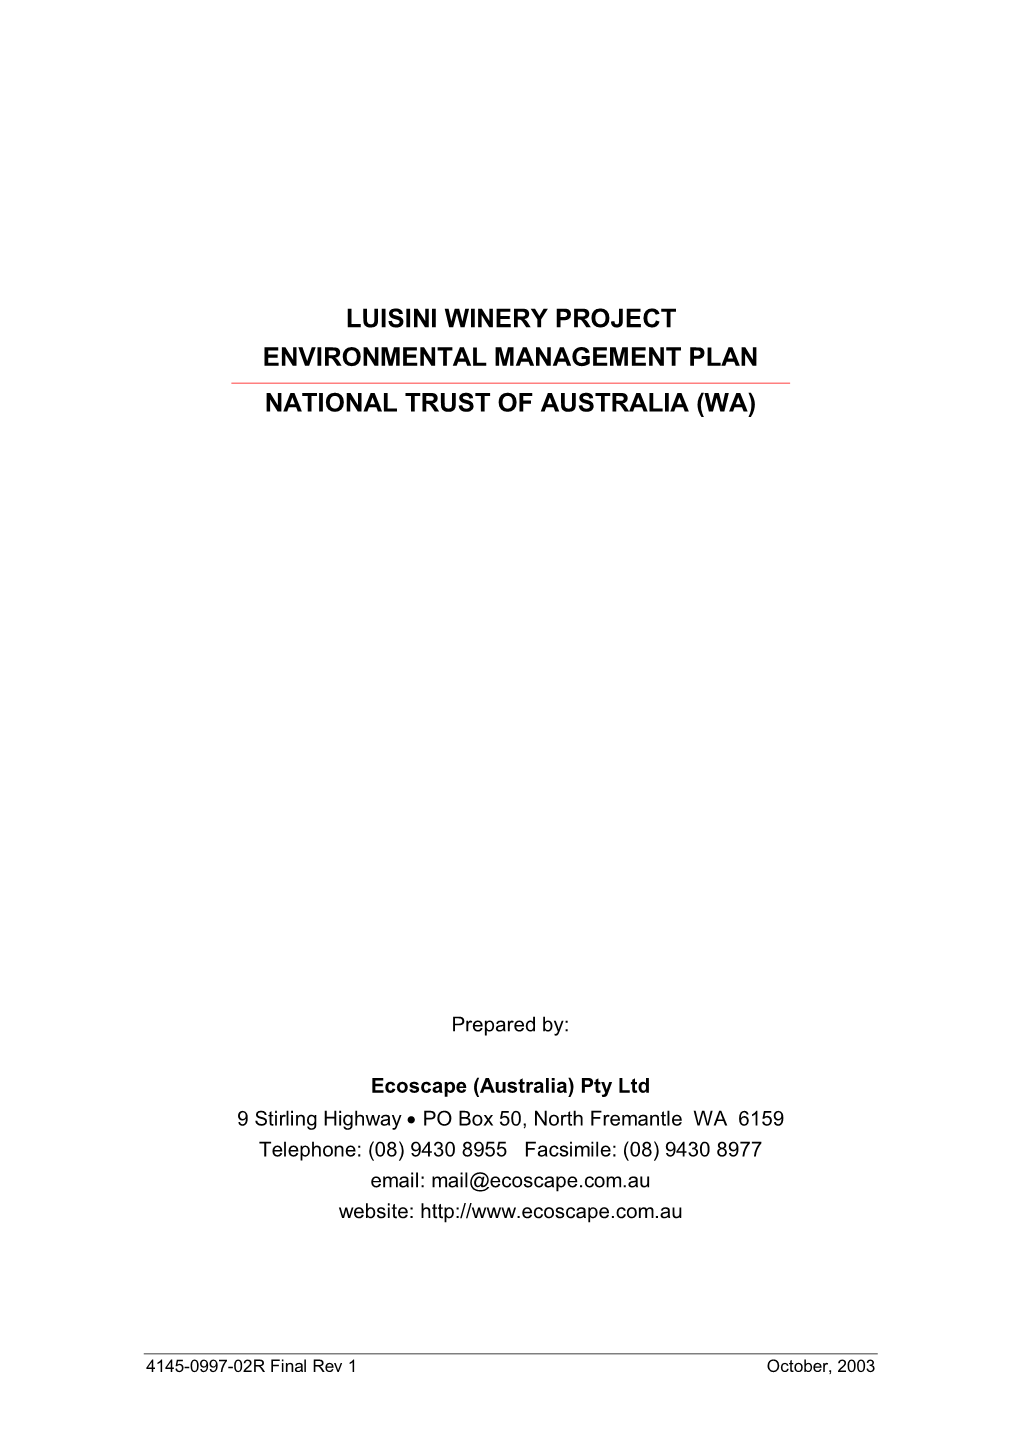 Luisini Winery Project Environmental Management Plan National Trust of Australia (Wa)